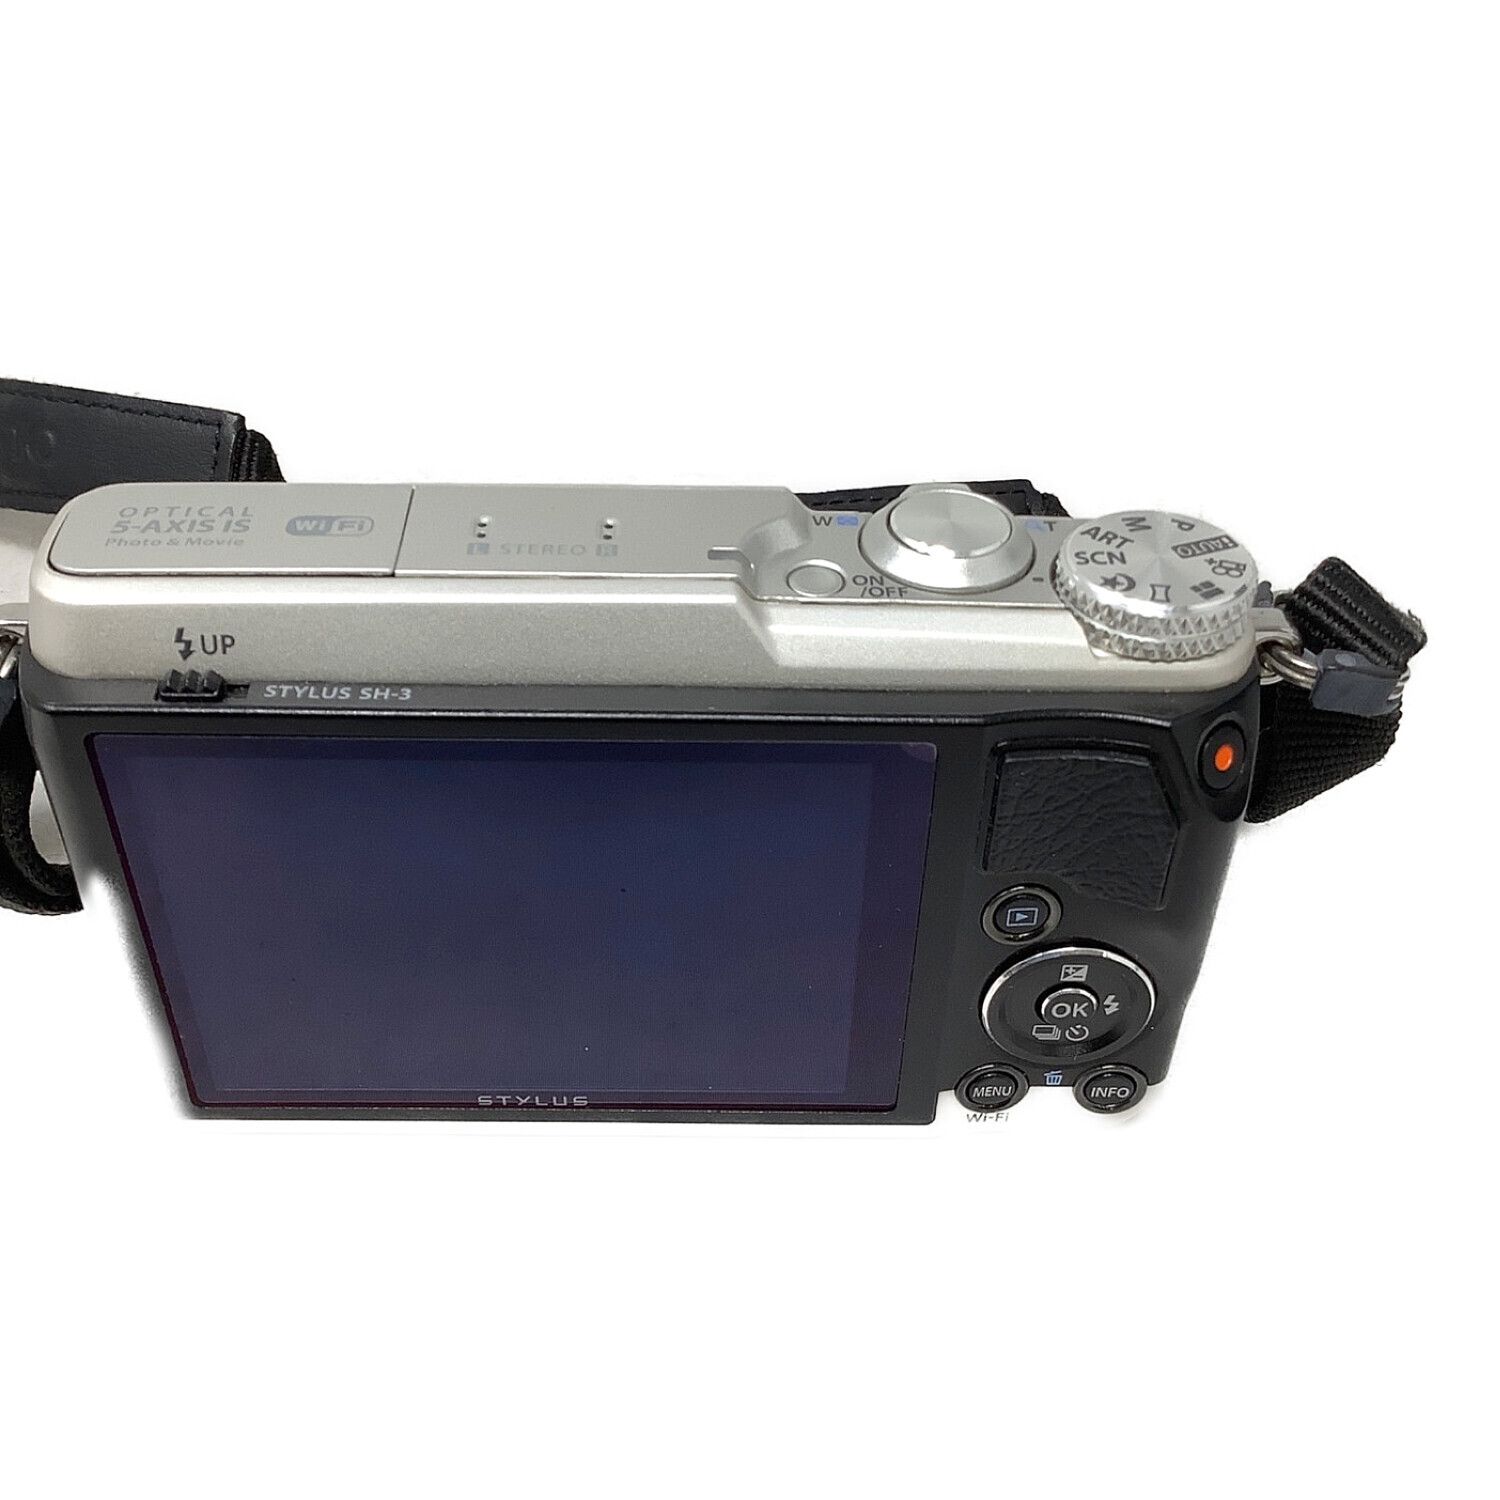 OLYMPUS (オリンパス) コンパクトデジタルカメラ SH-3 1600万画素 専用